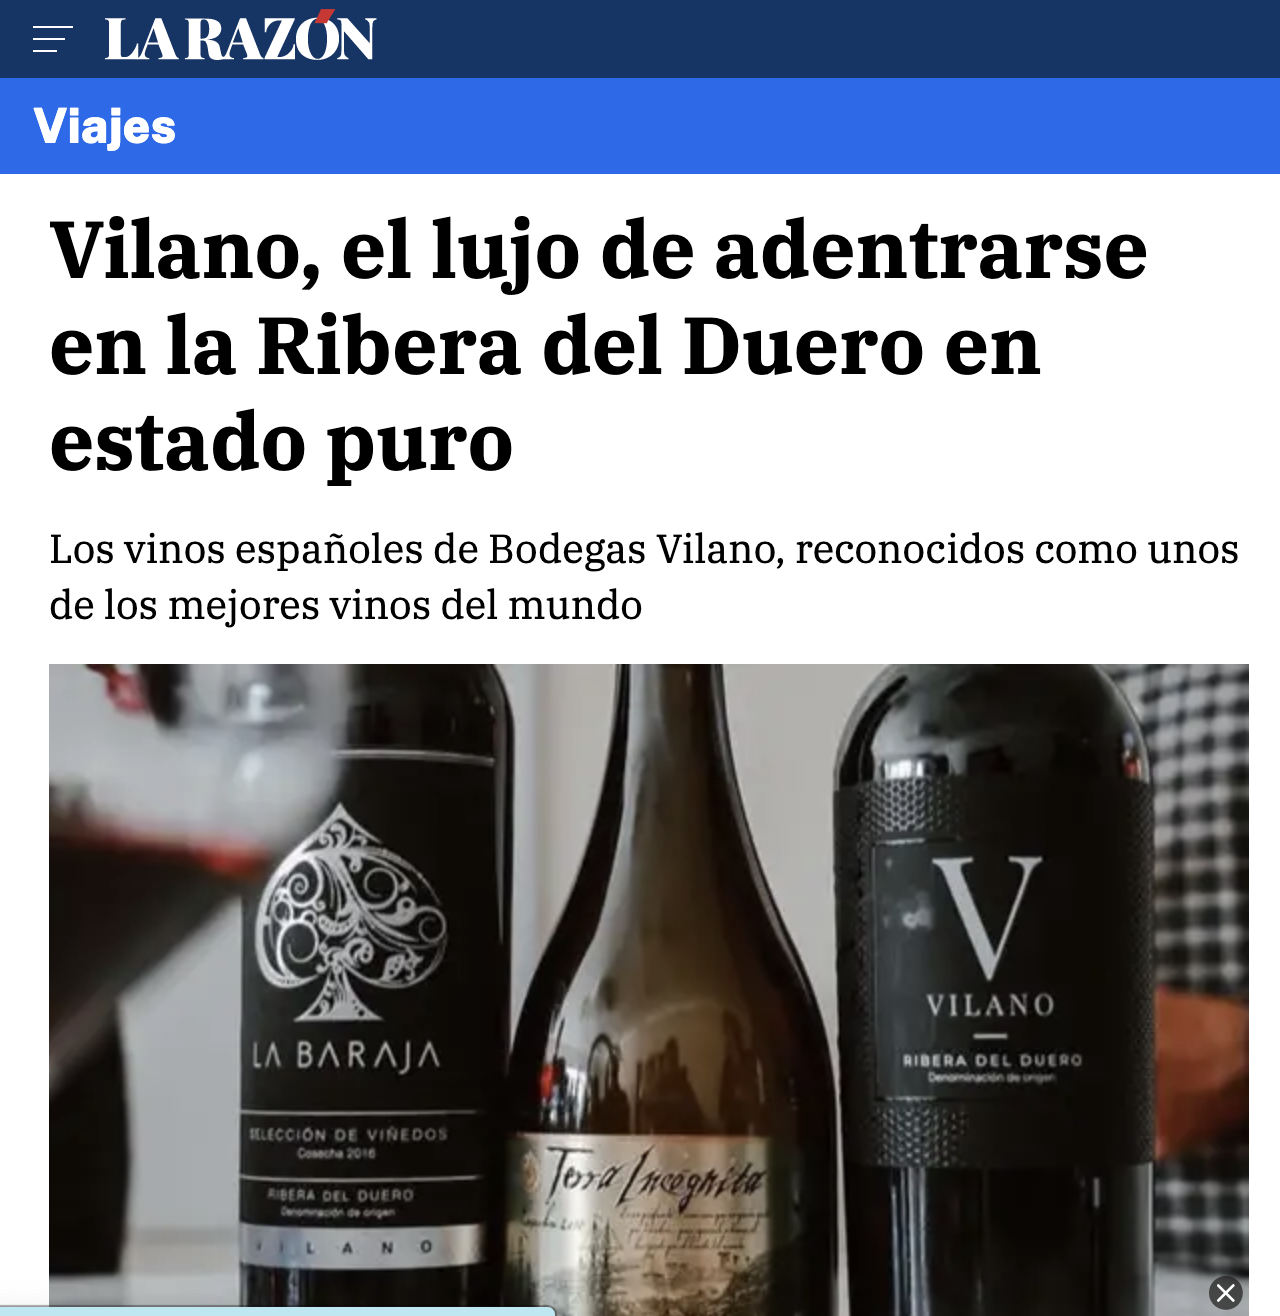 La Razón newspaper highlights Vilano’s excellence